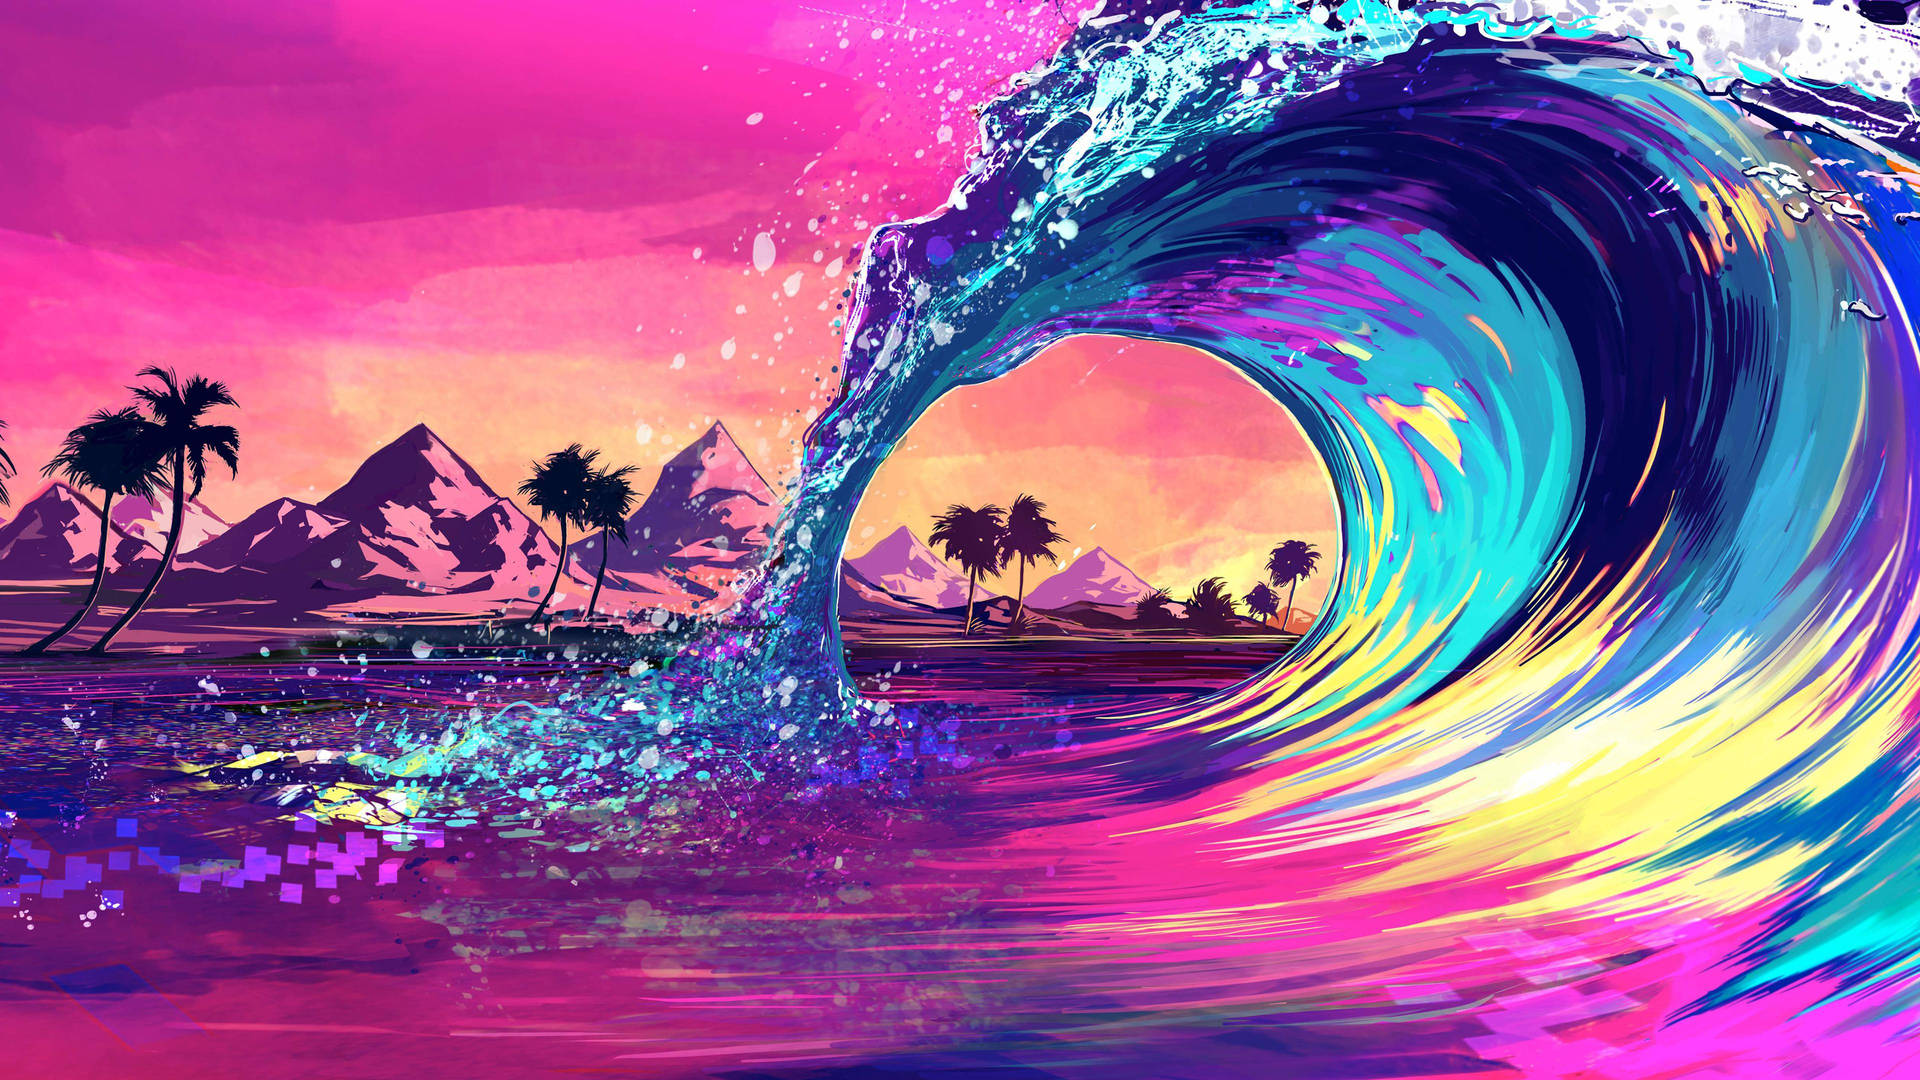 Ocean Waves Digital Art Wallpaper